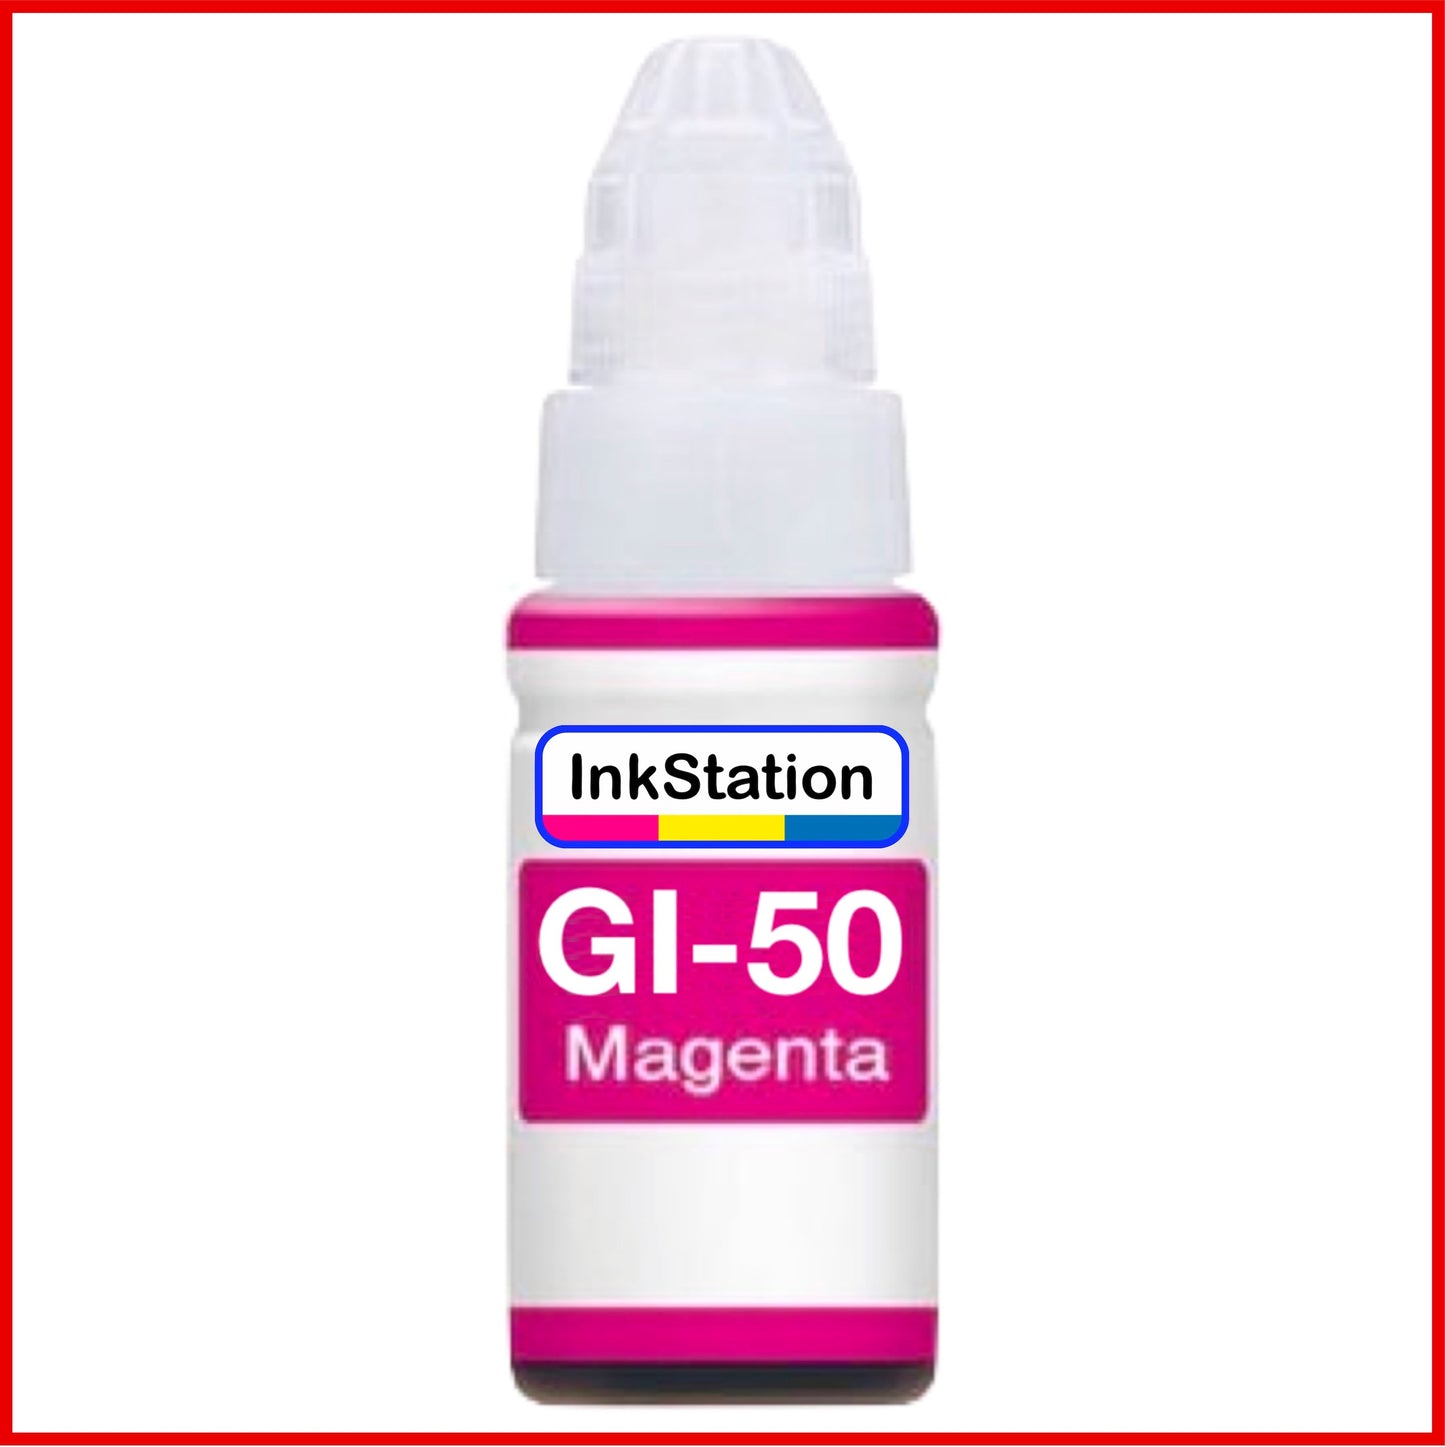 Compatible Magenta Ink Bottles for GI-50 Canon Pixma